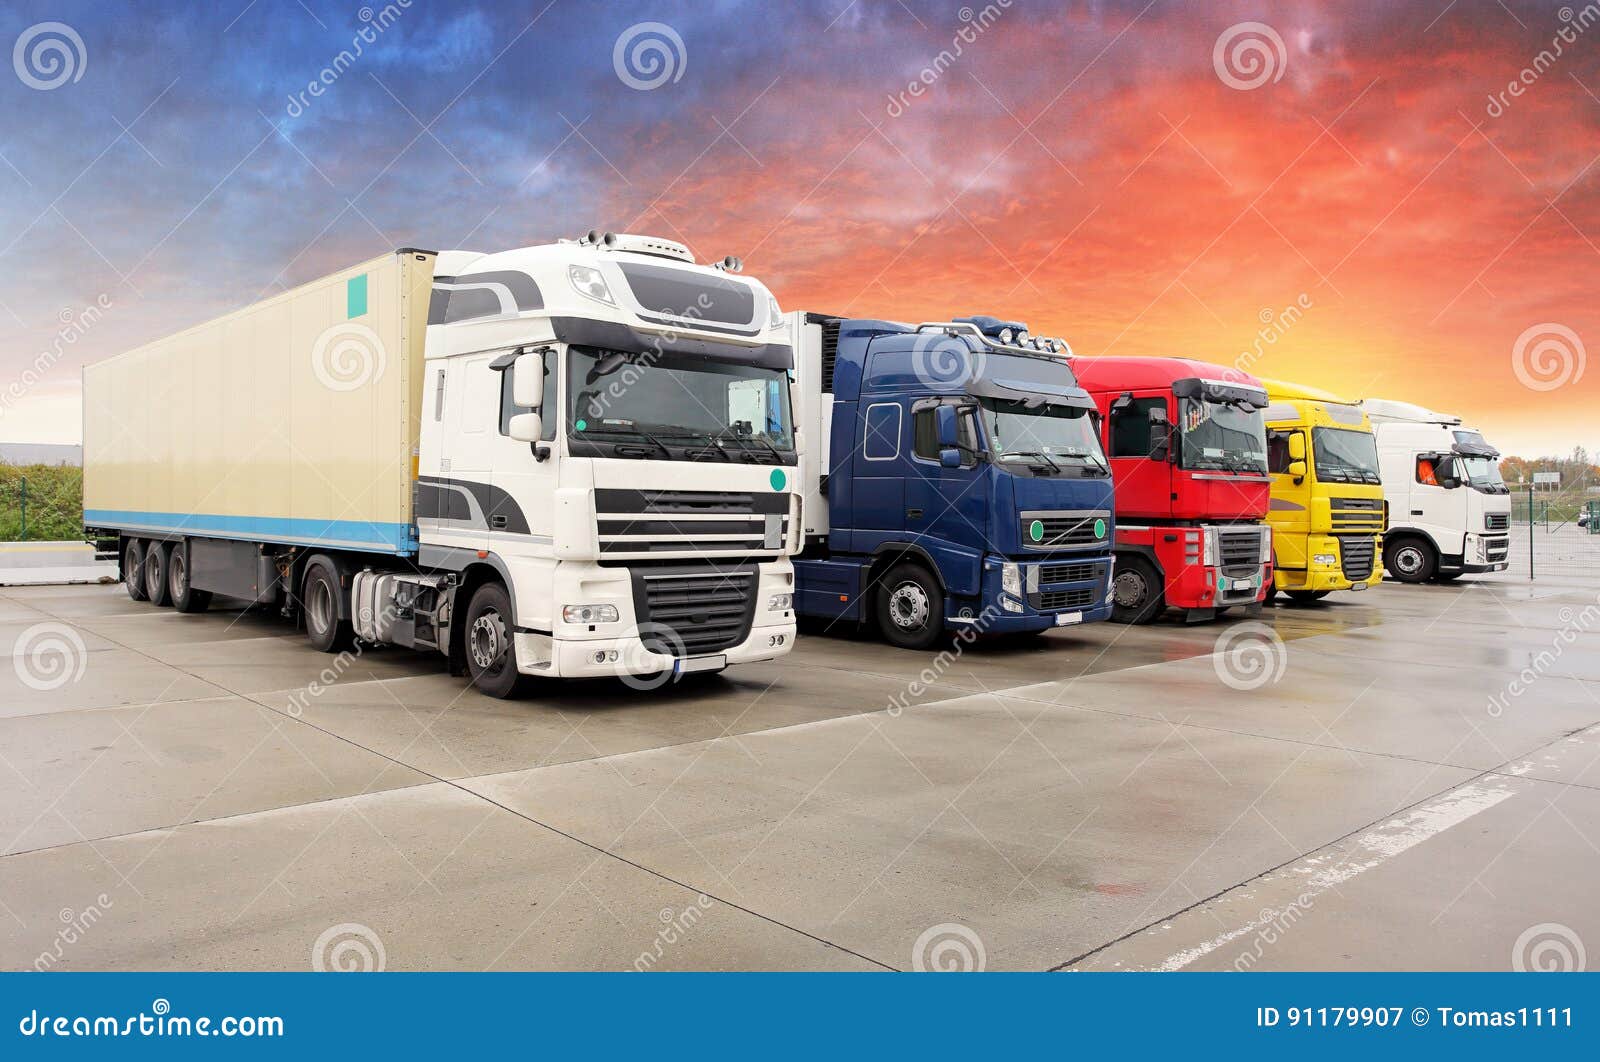 truck, transportation, freight cargo transport, shipping